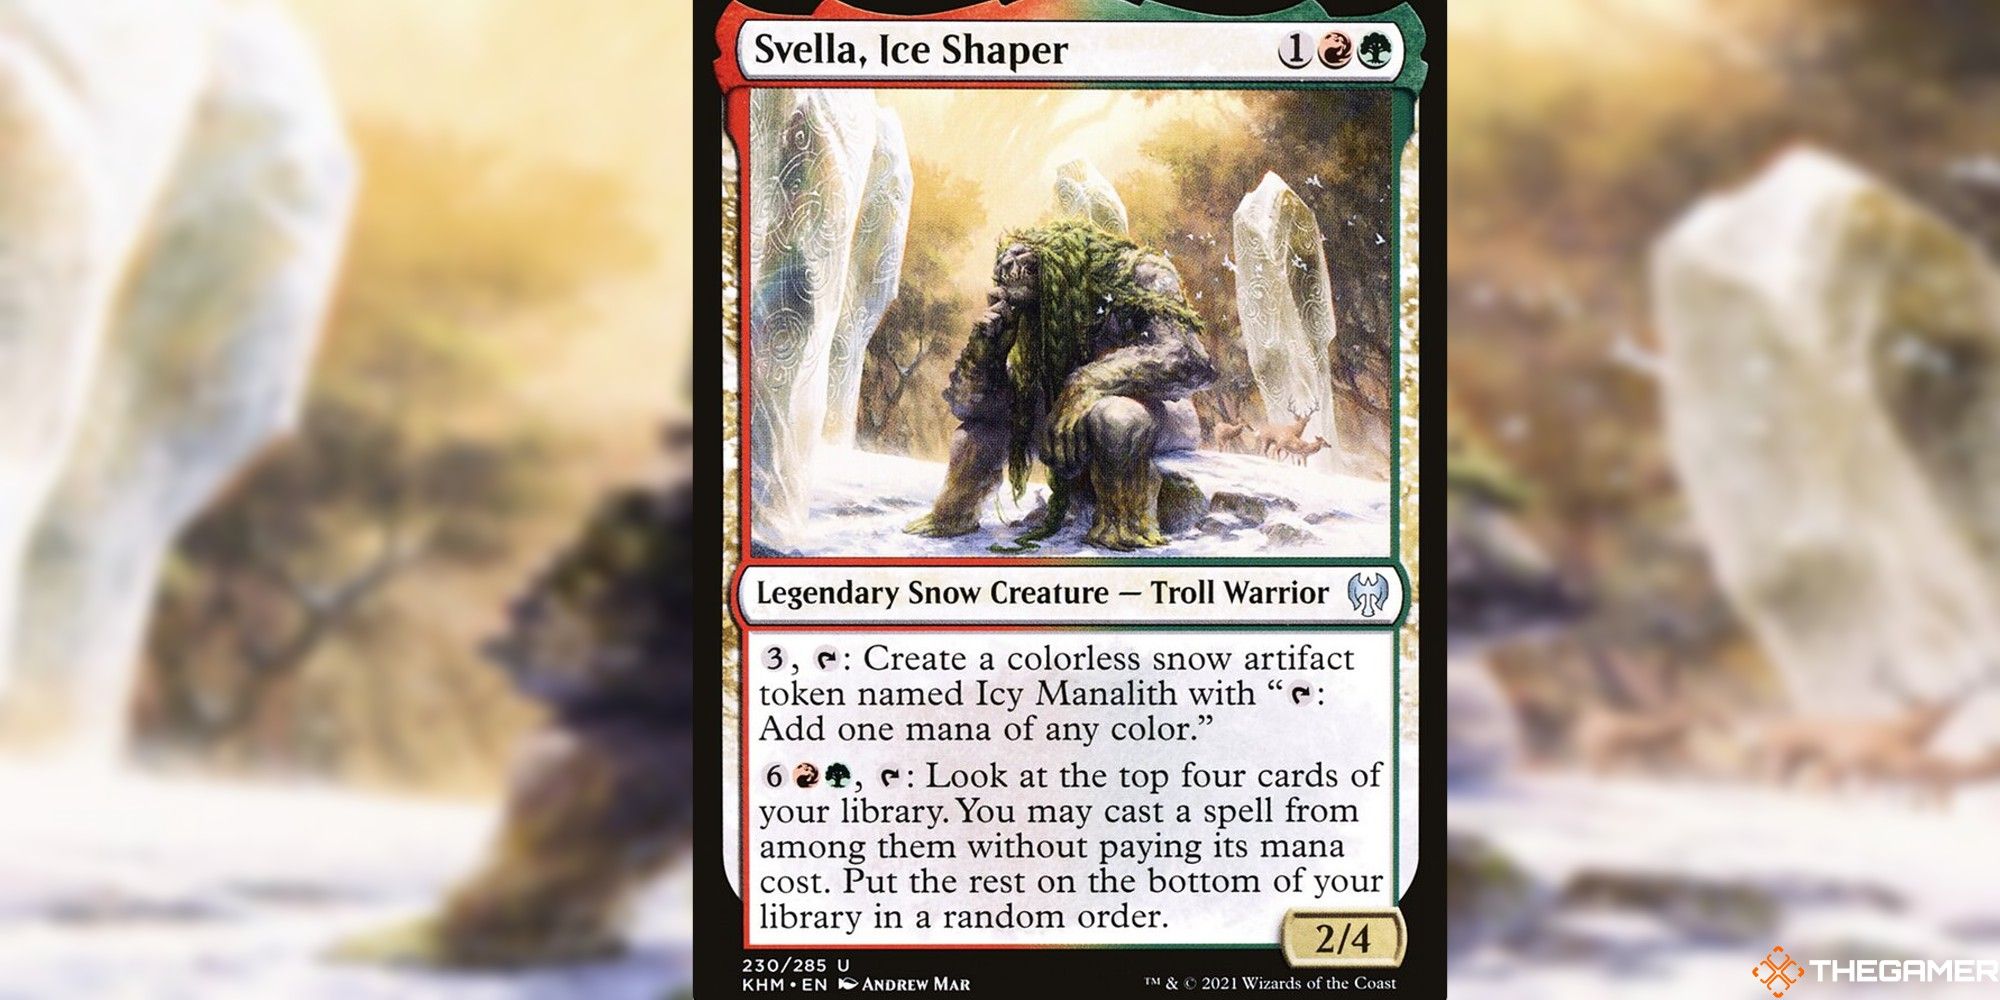 mtg svella, ice shaper full card and art background